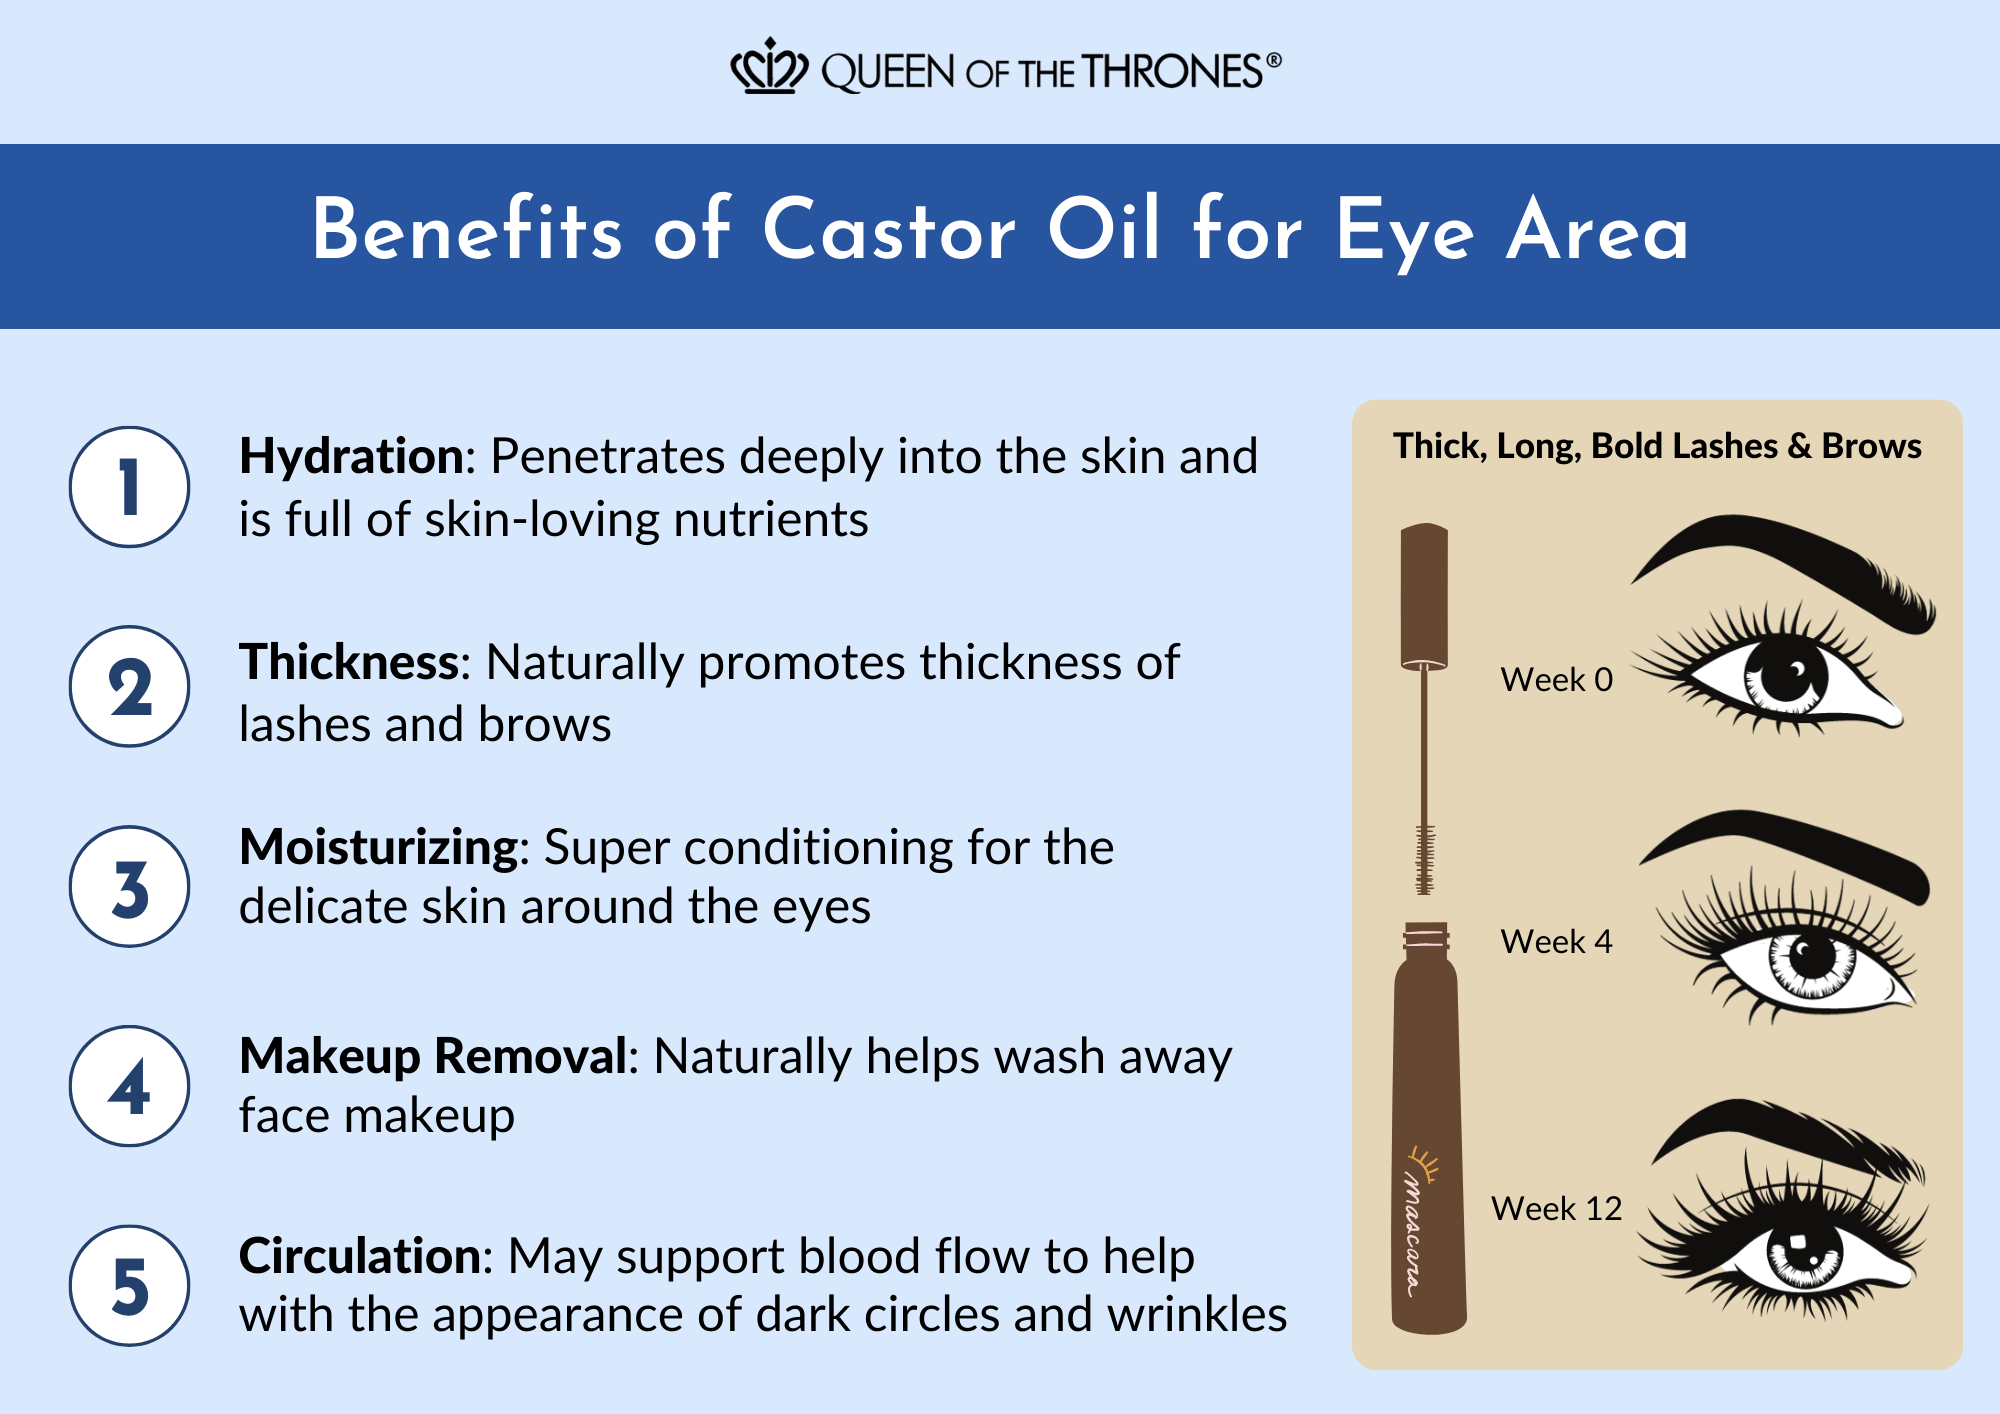 Benefits of Queen of the Thrones Castor Oil for Eyes